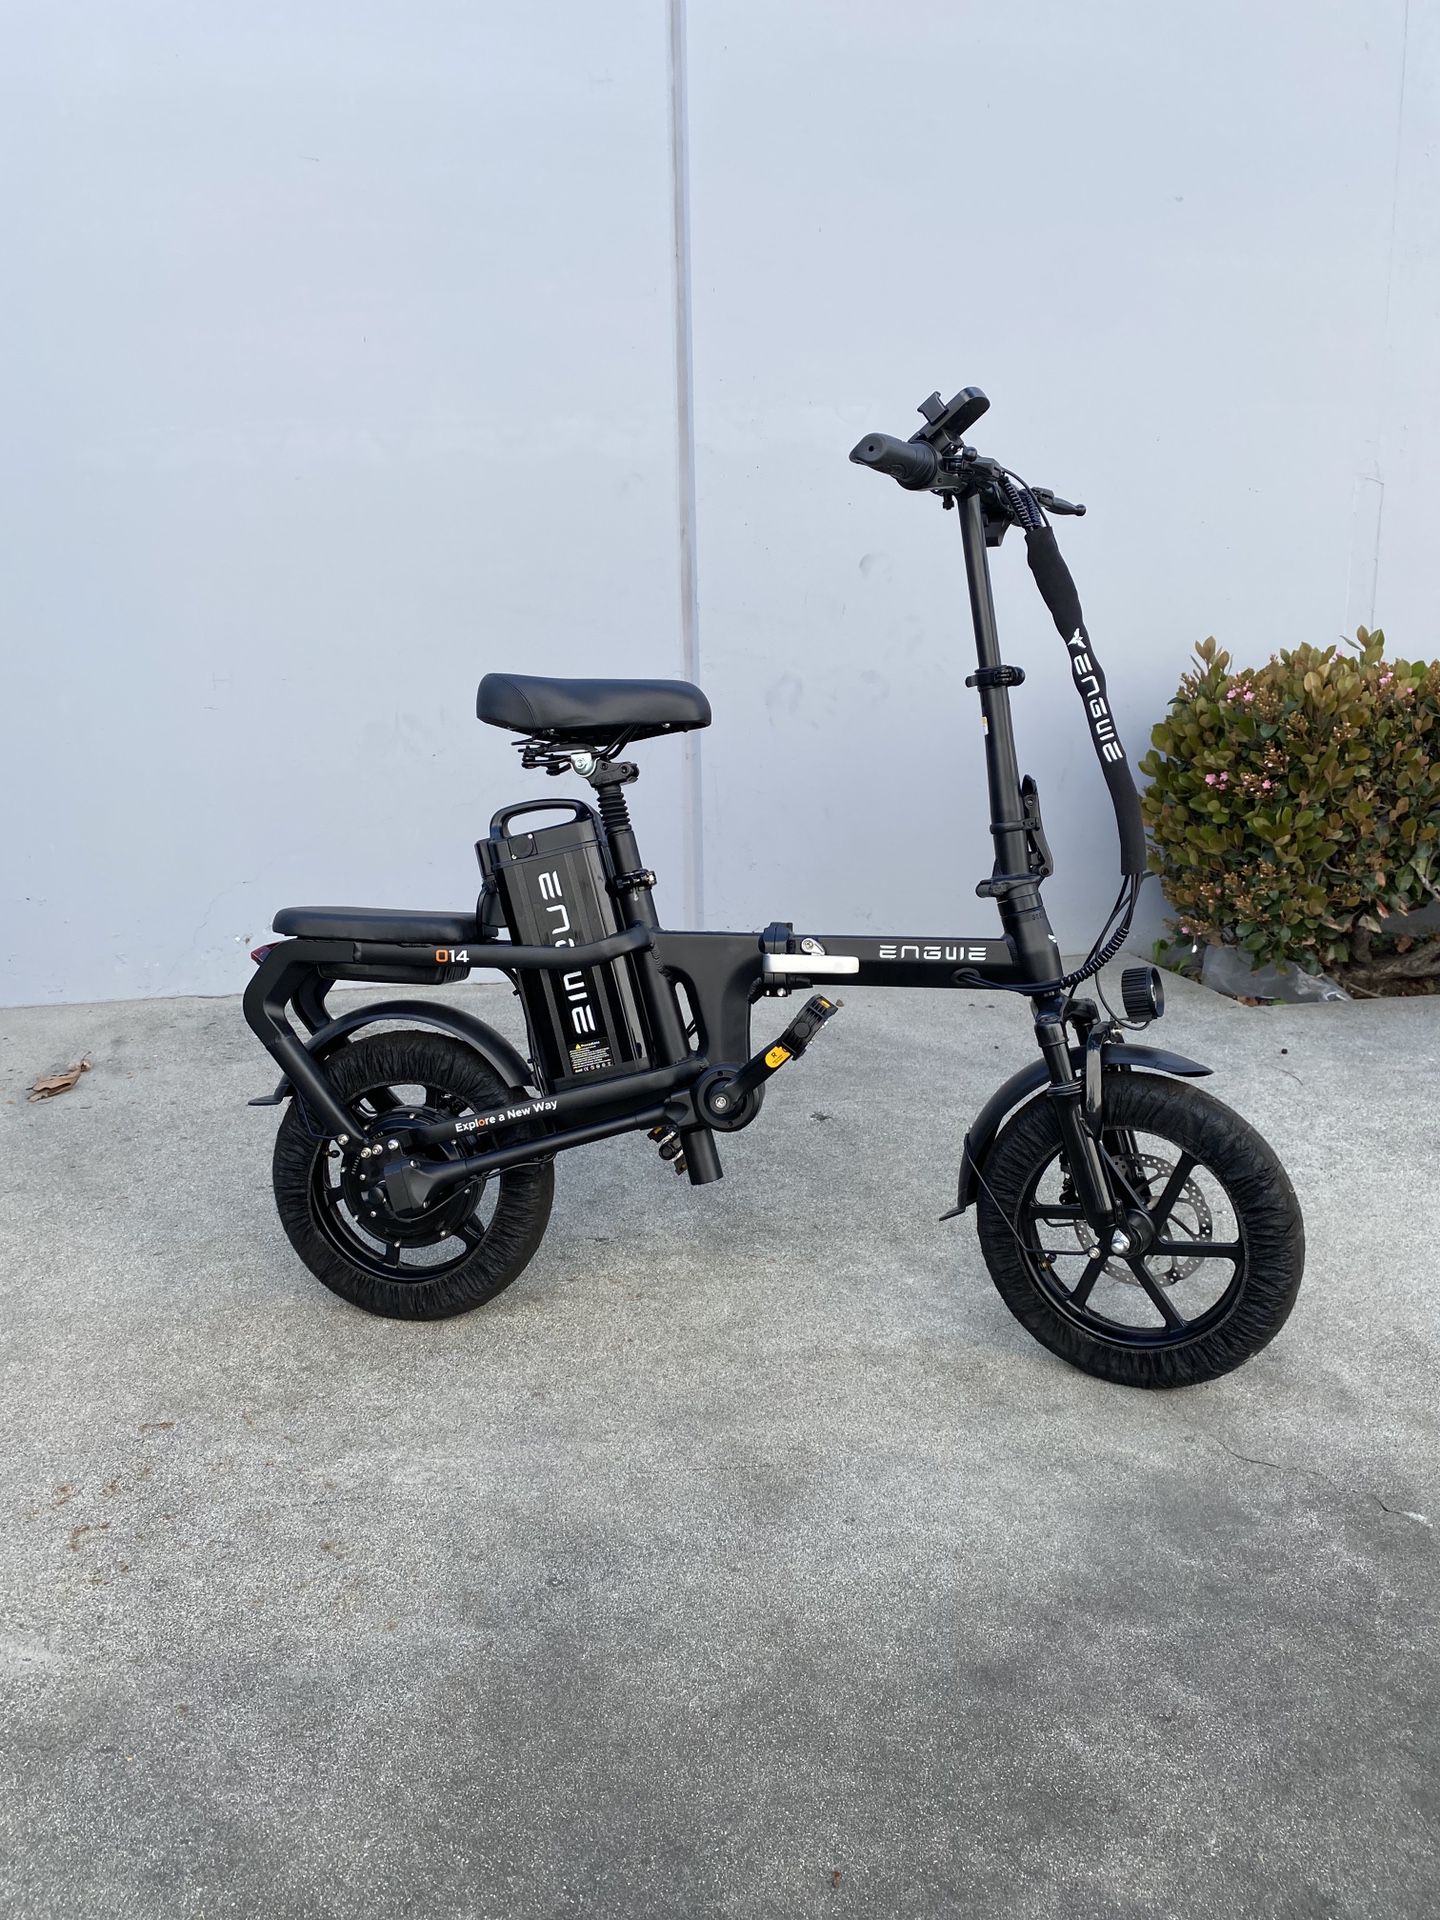 ENGWE O14,Shaft Drive Design (chainless) Mini Folding E-Bike 14" Fat Tire 400W 15.6Ah Battery Electric Bike, gray/ white/ black  495/  380